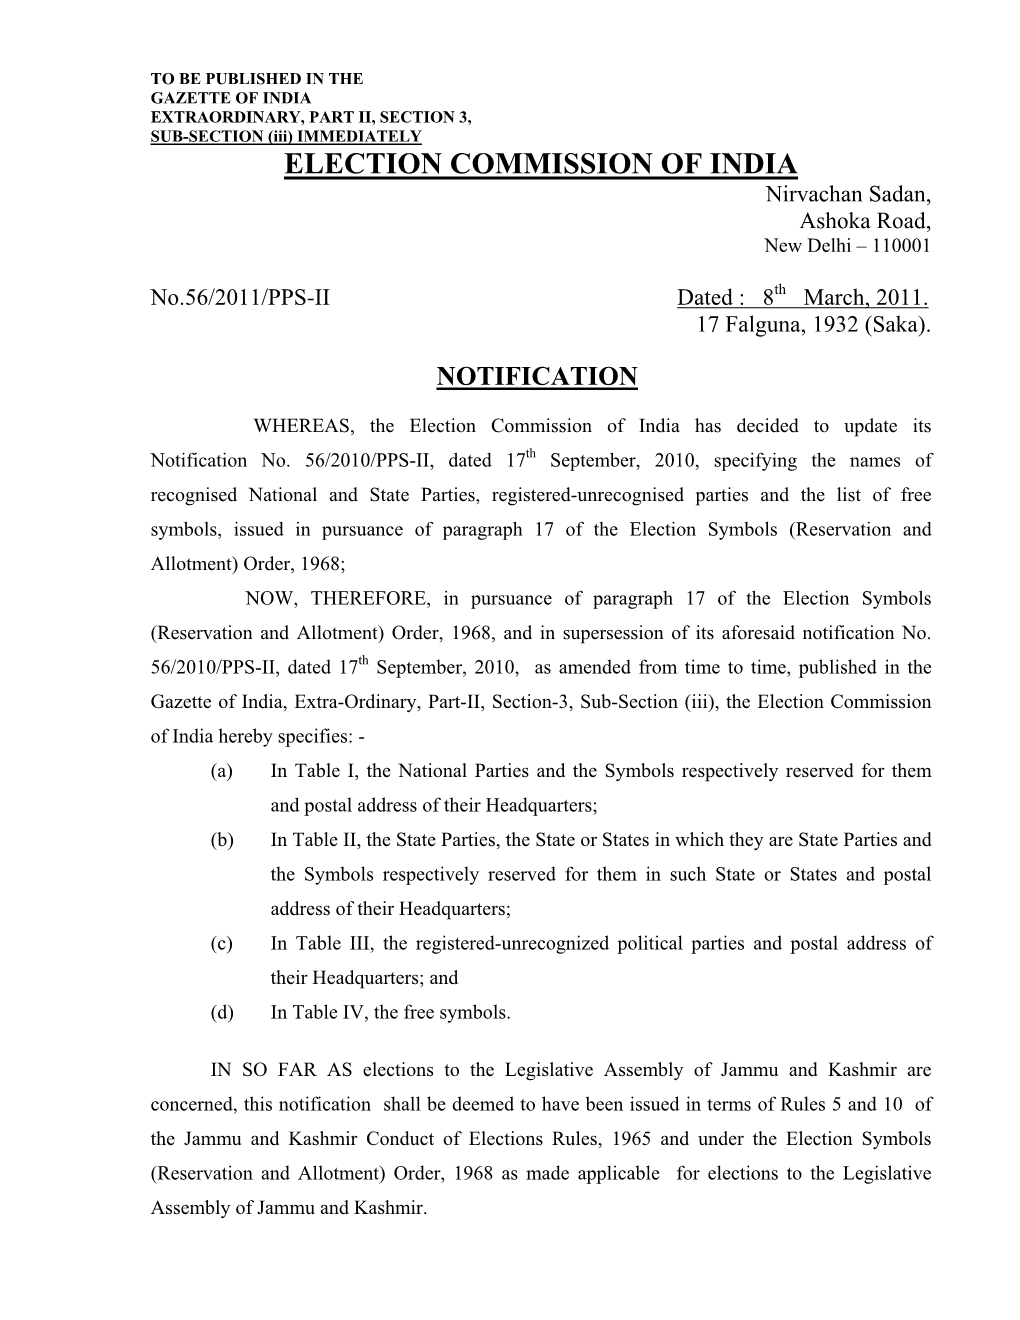 ELECTION COMMISSION of INDIA Nirvachan Sadan, Ashoka Road, New Delhi – 110001